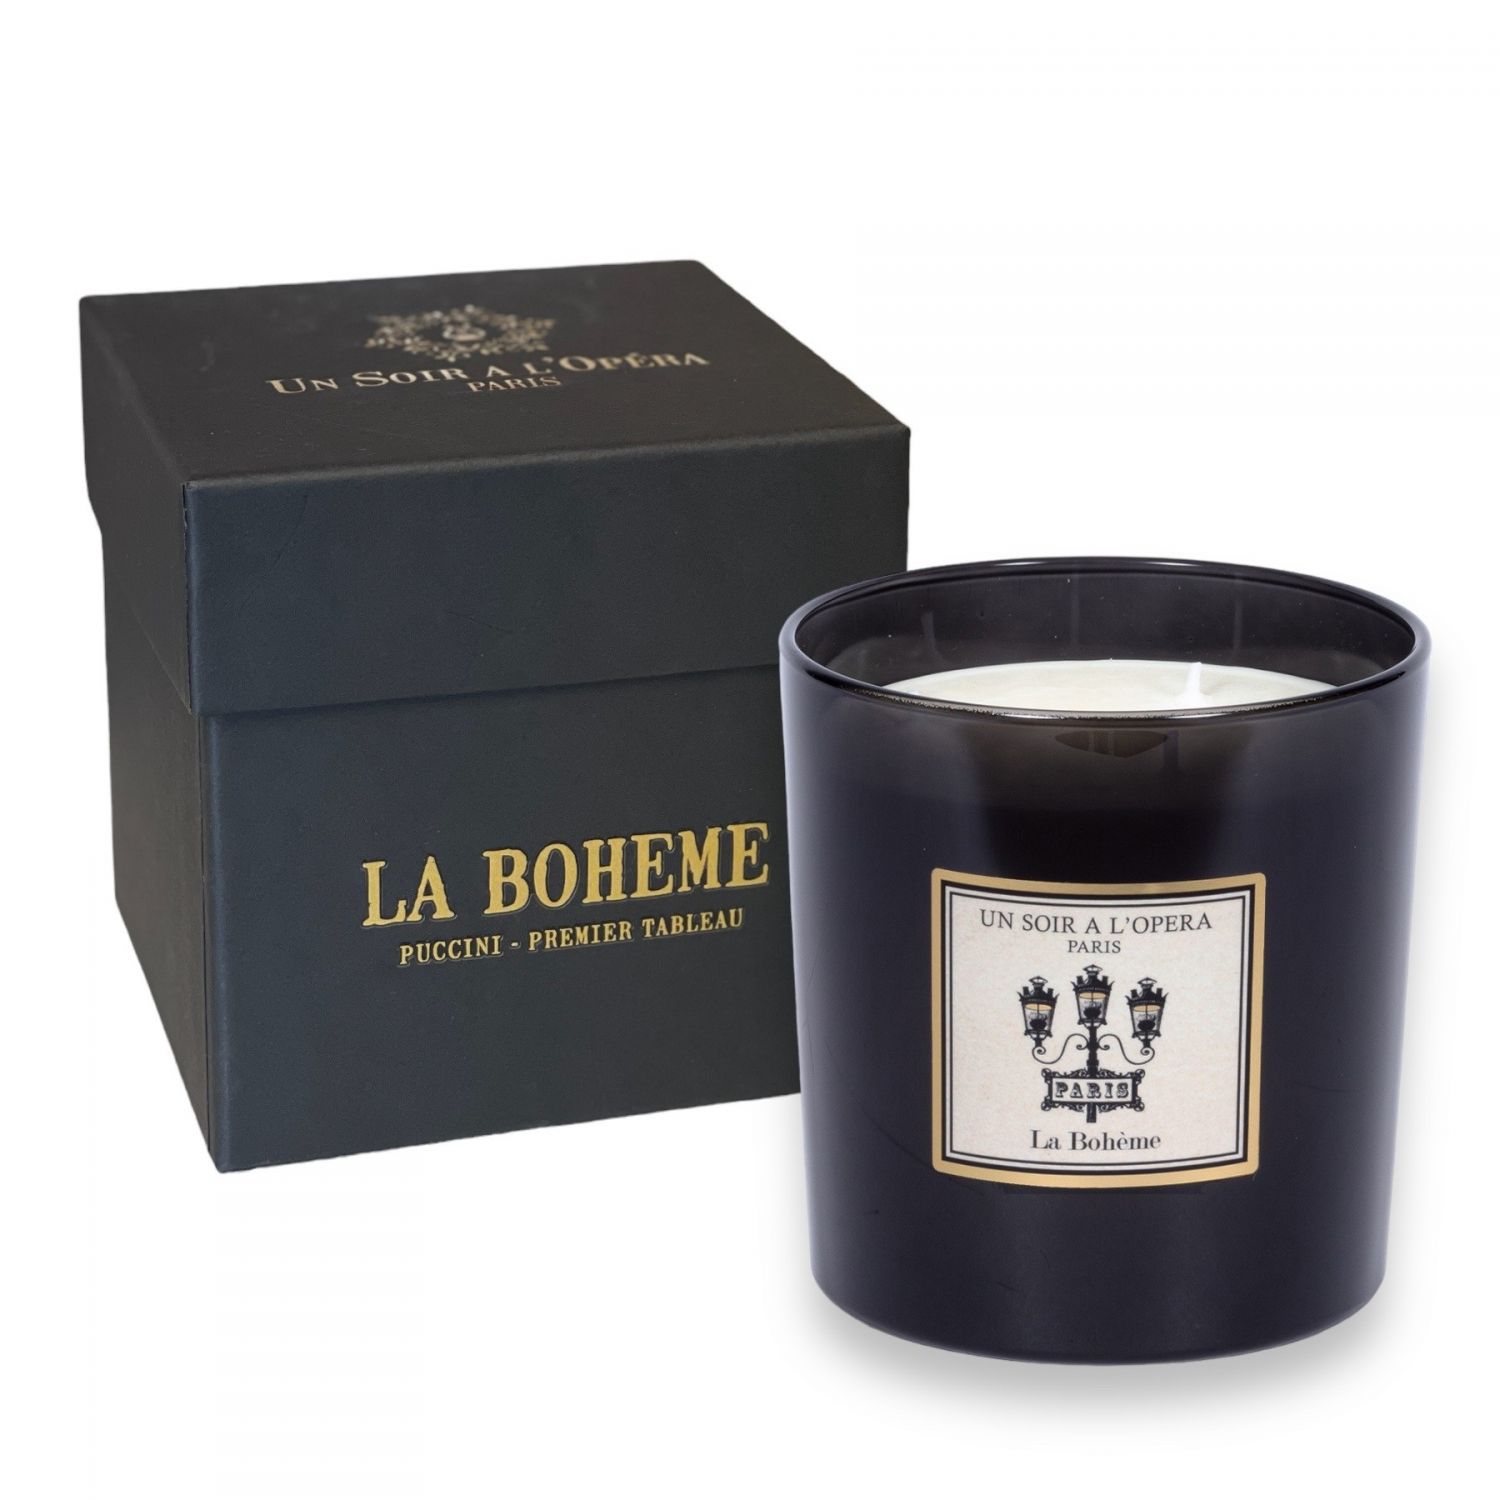 LA BOHEME - Christmas Luxury scented candle 550g - The Artist life - 2 units minimum